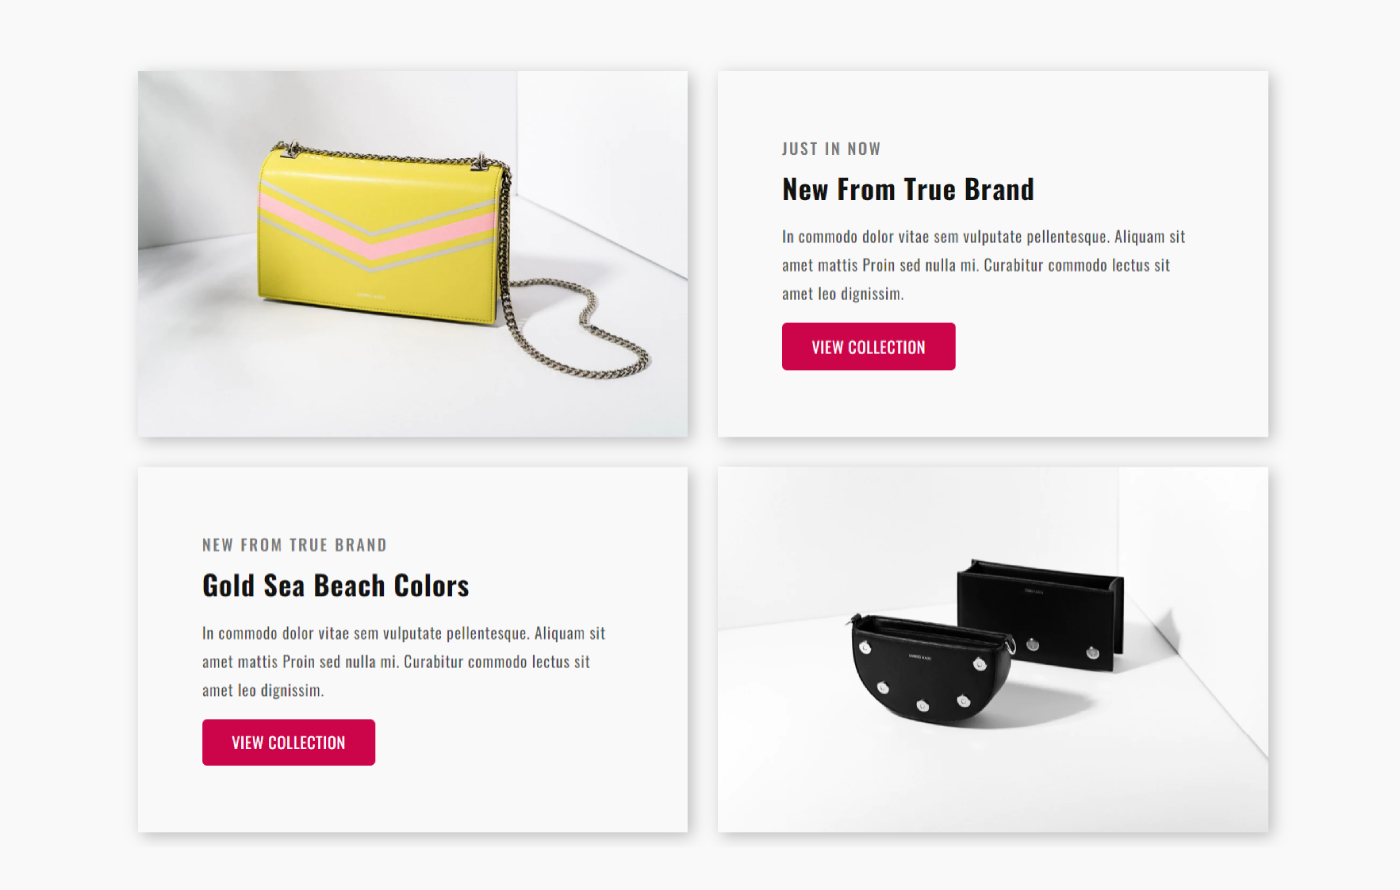 Bagodify - Handbag Store Shopify template built by Pagefly